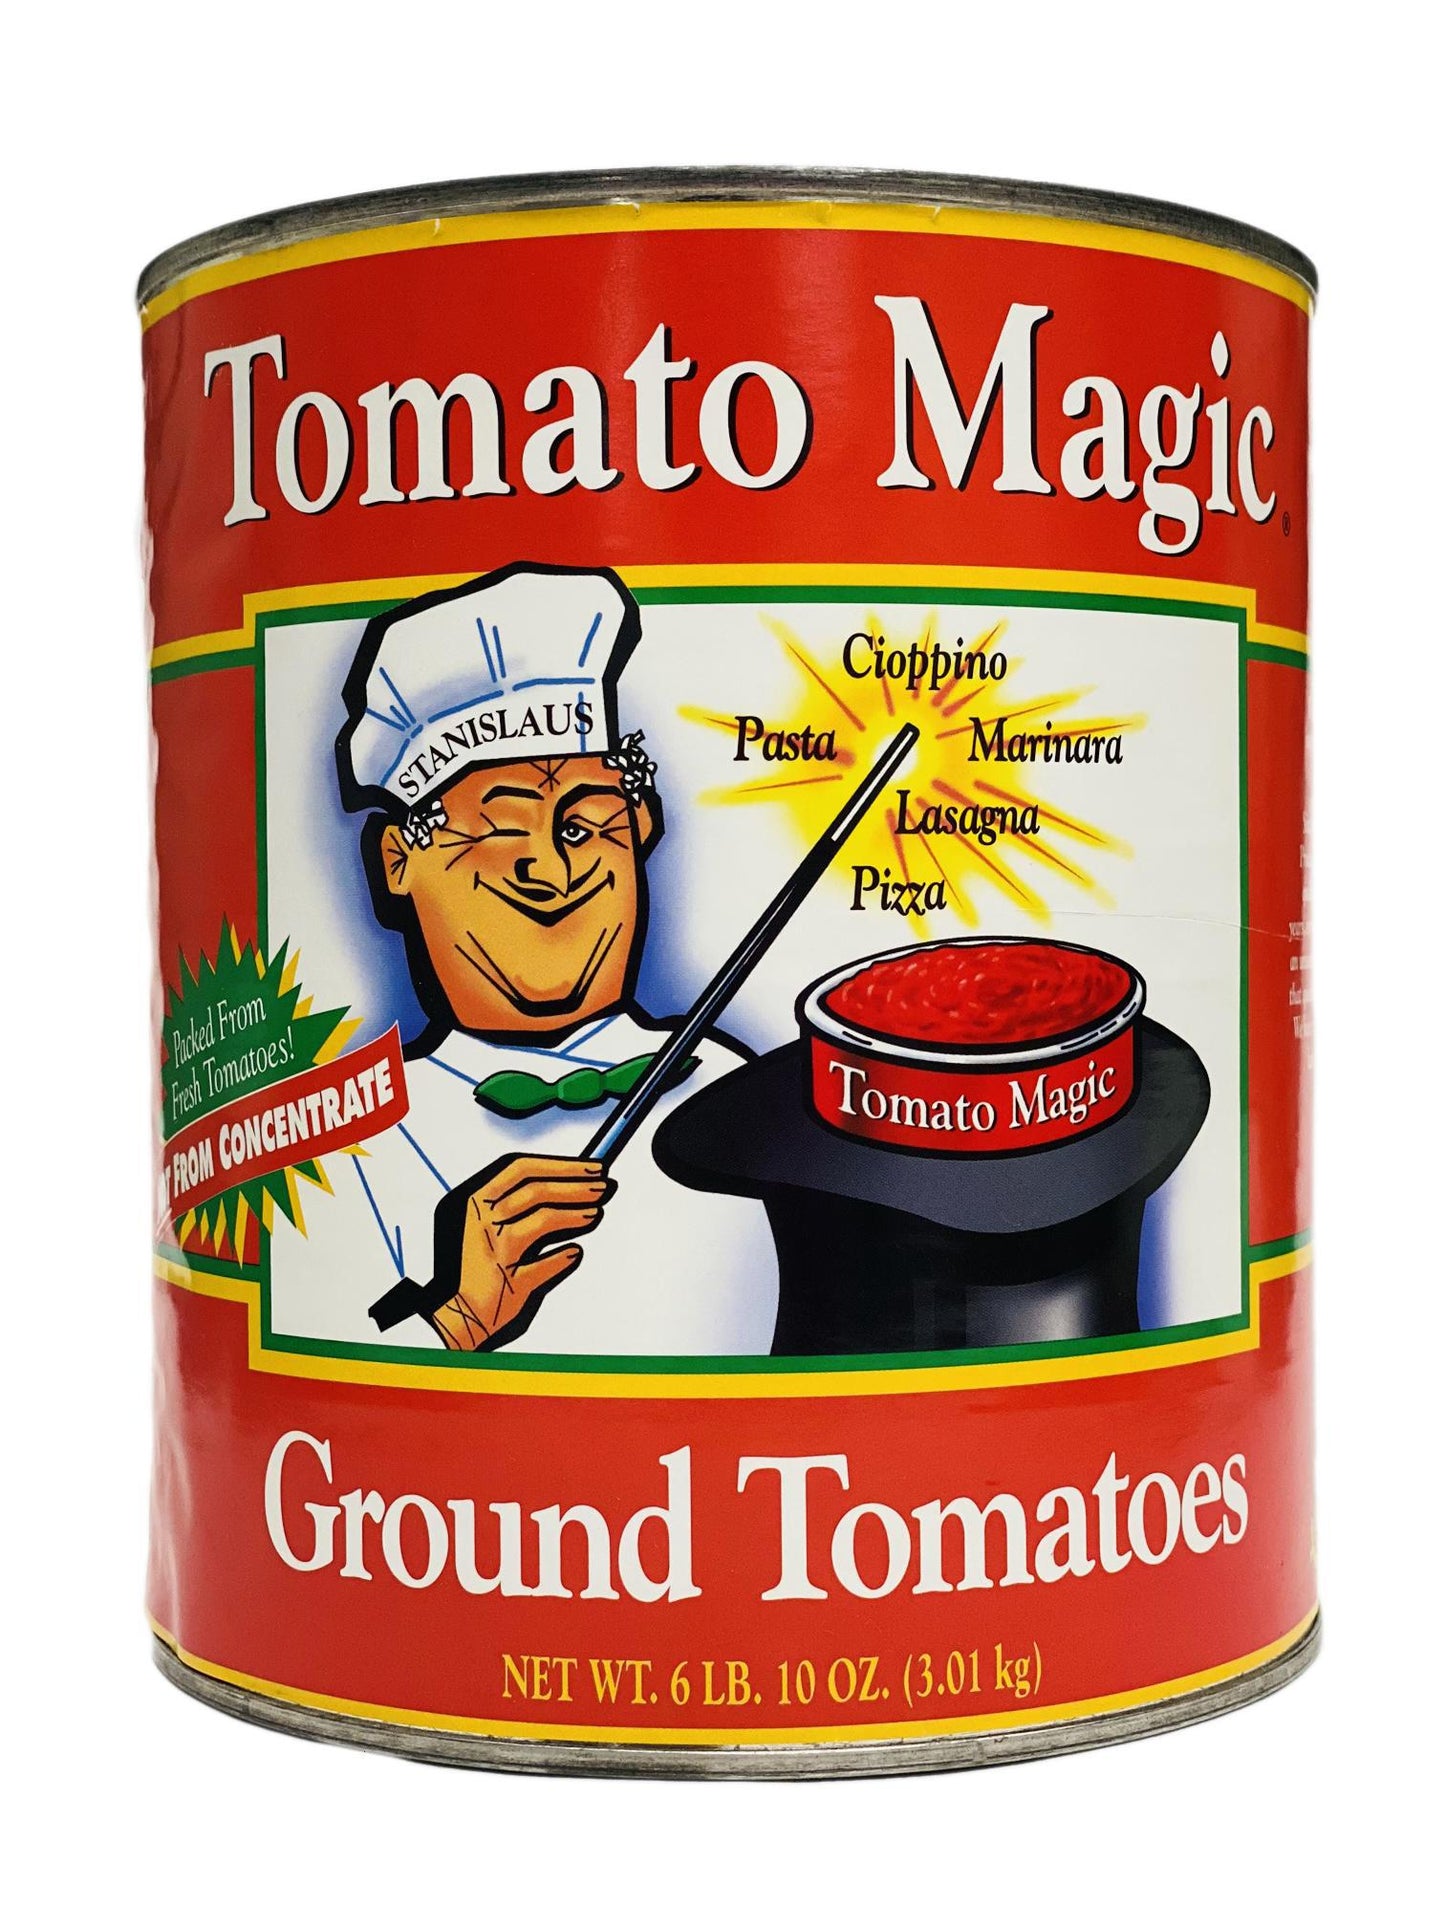 Tomato magic Ground Peeled Tomatoes, 6 lb 10 oz